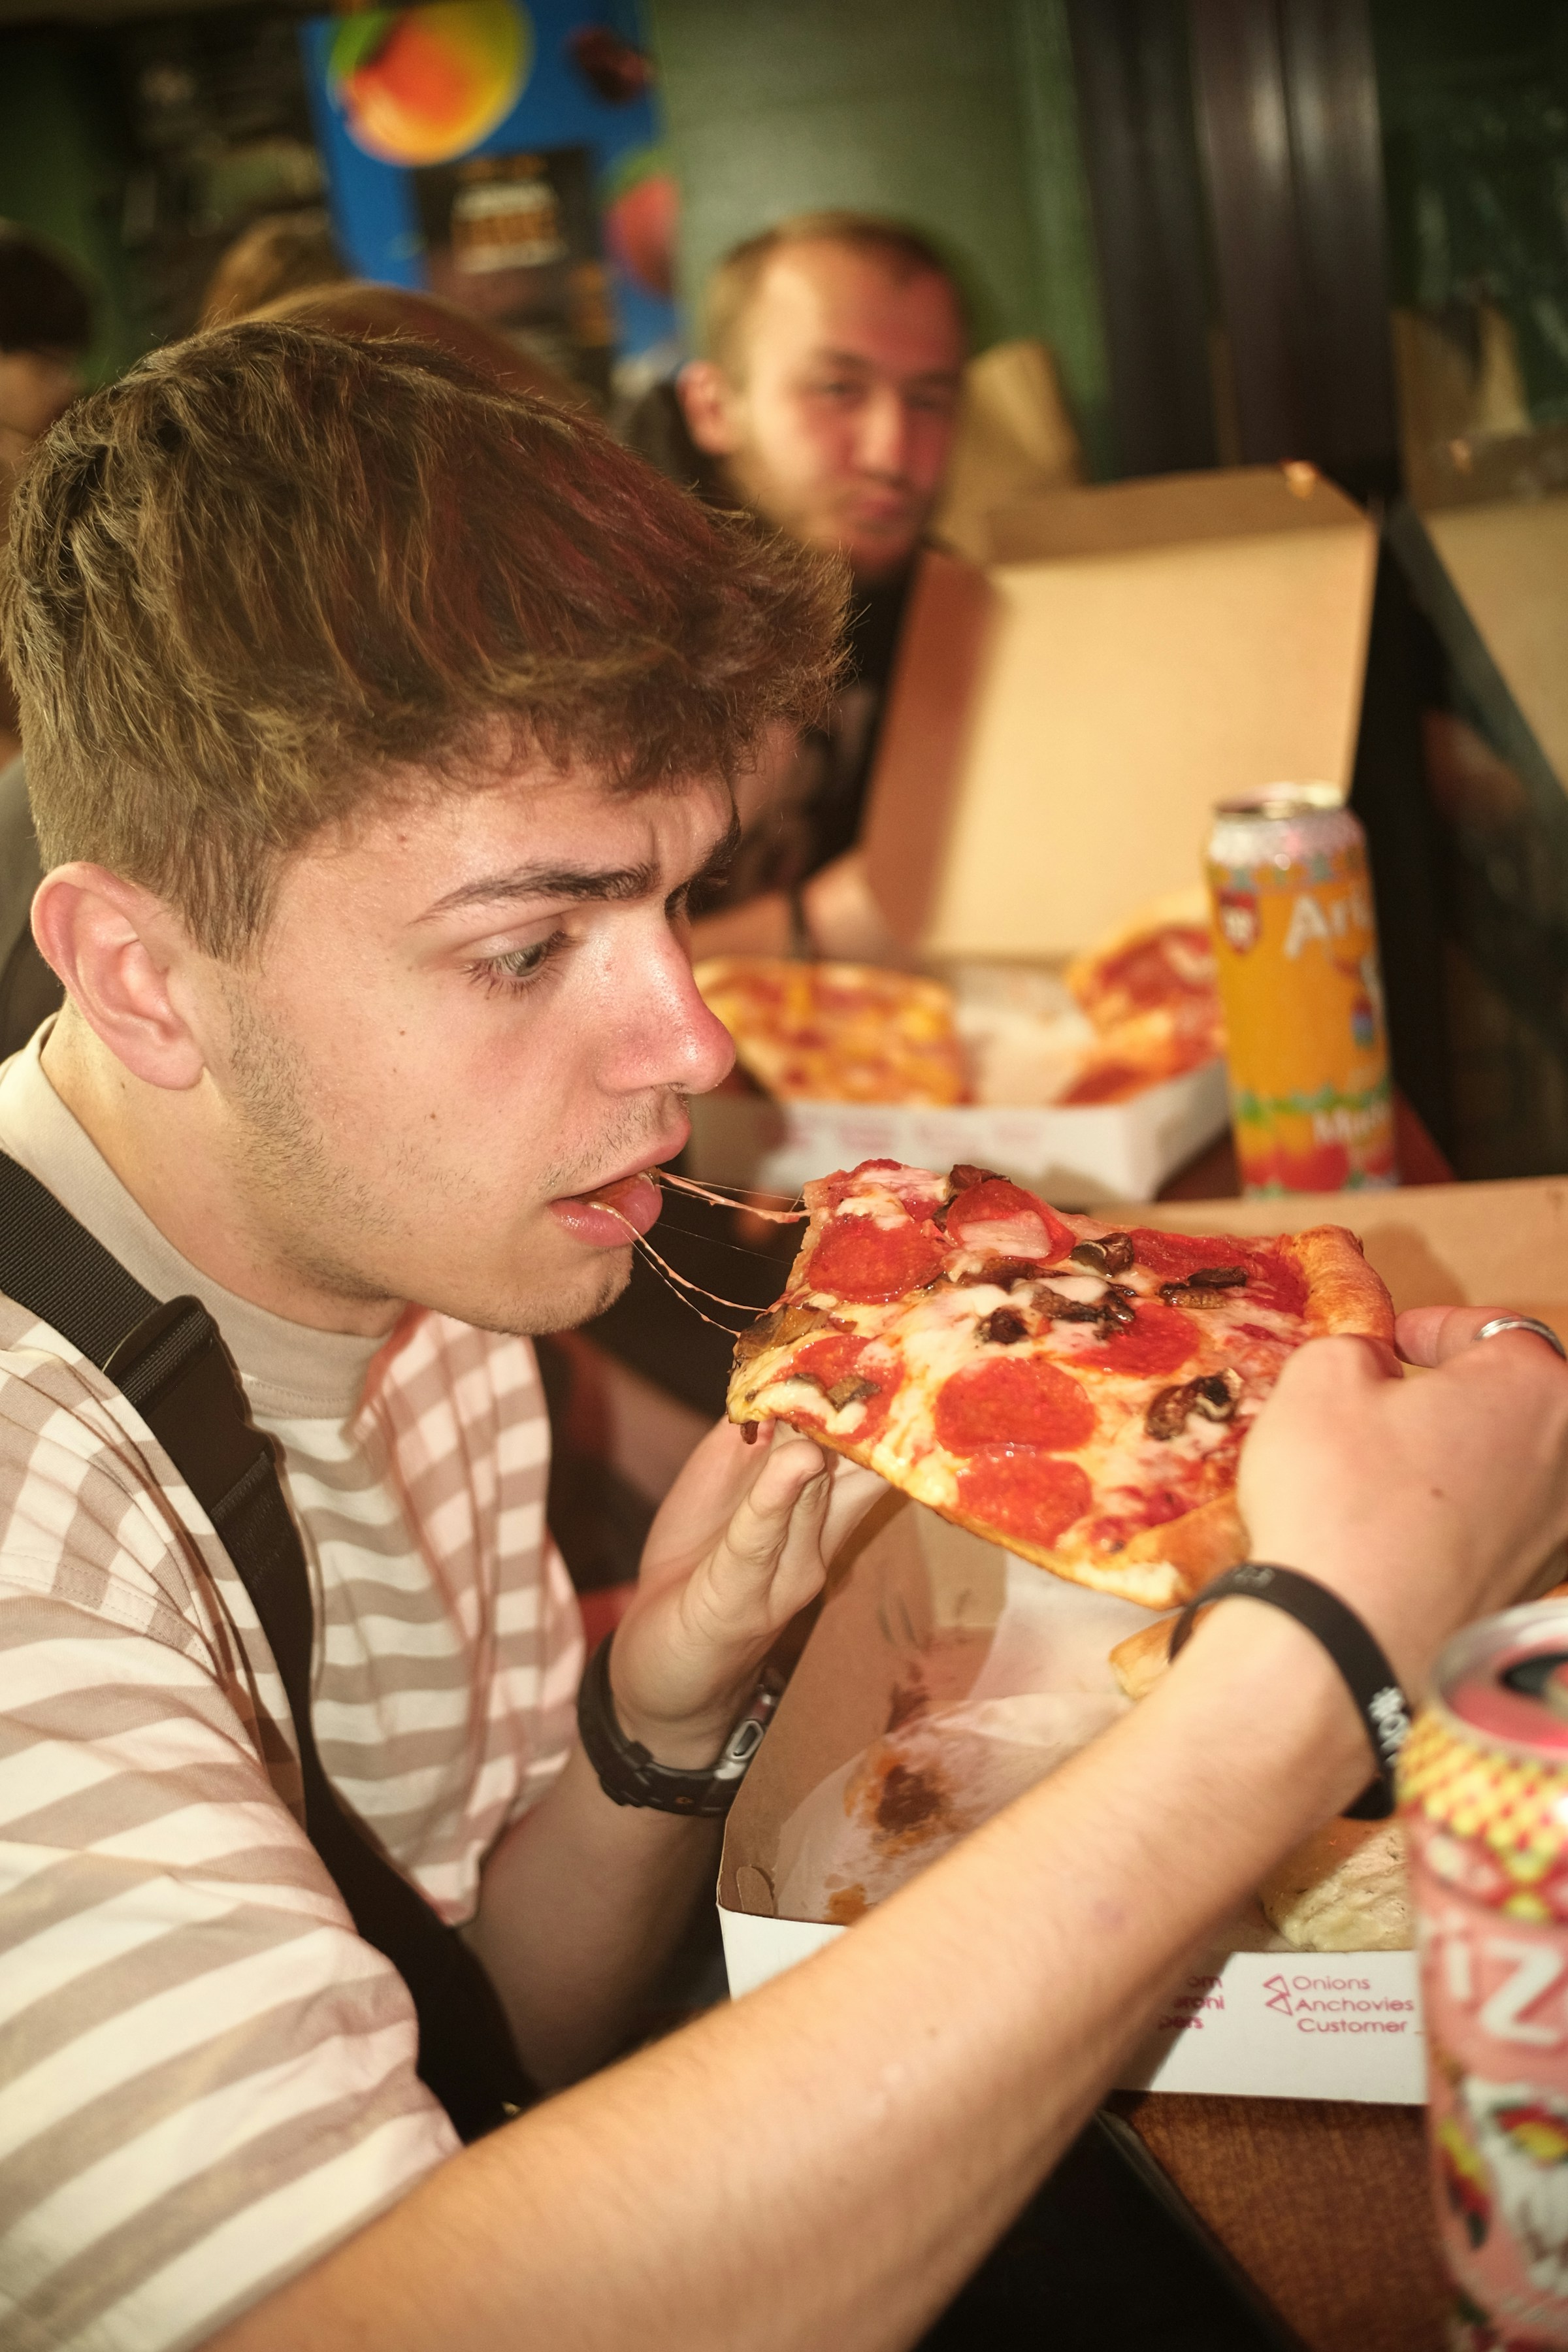 Man eating pizza | Source: Unsplash